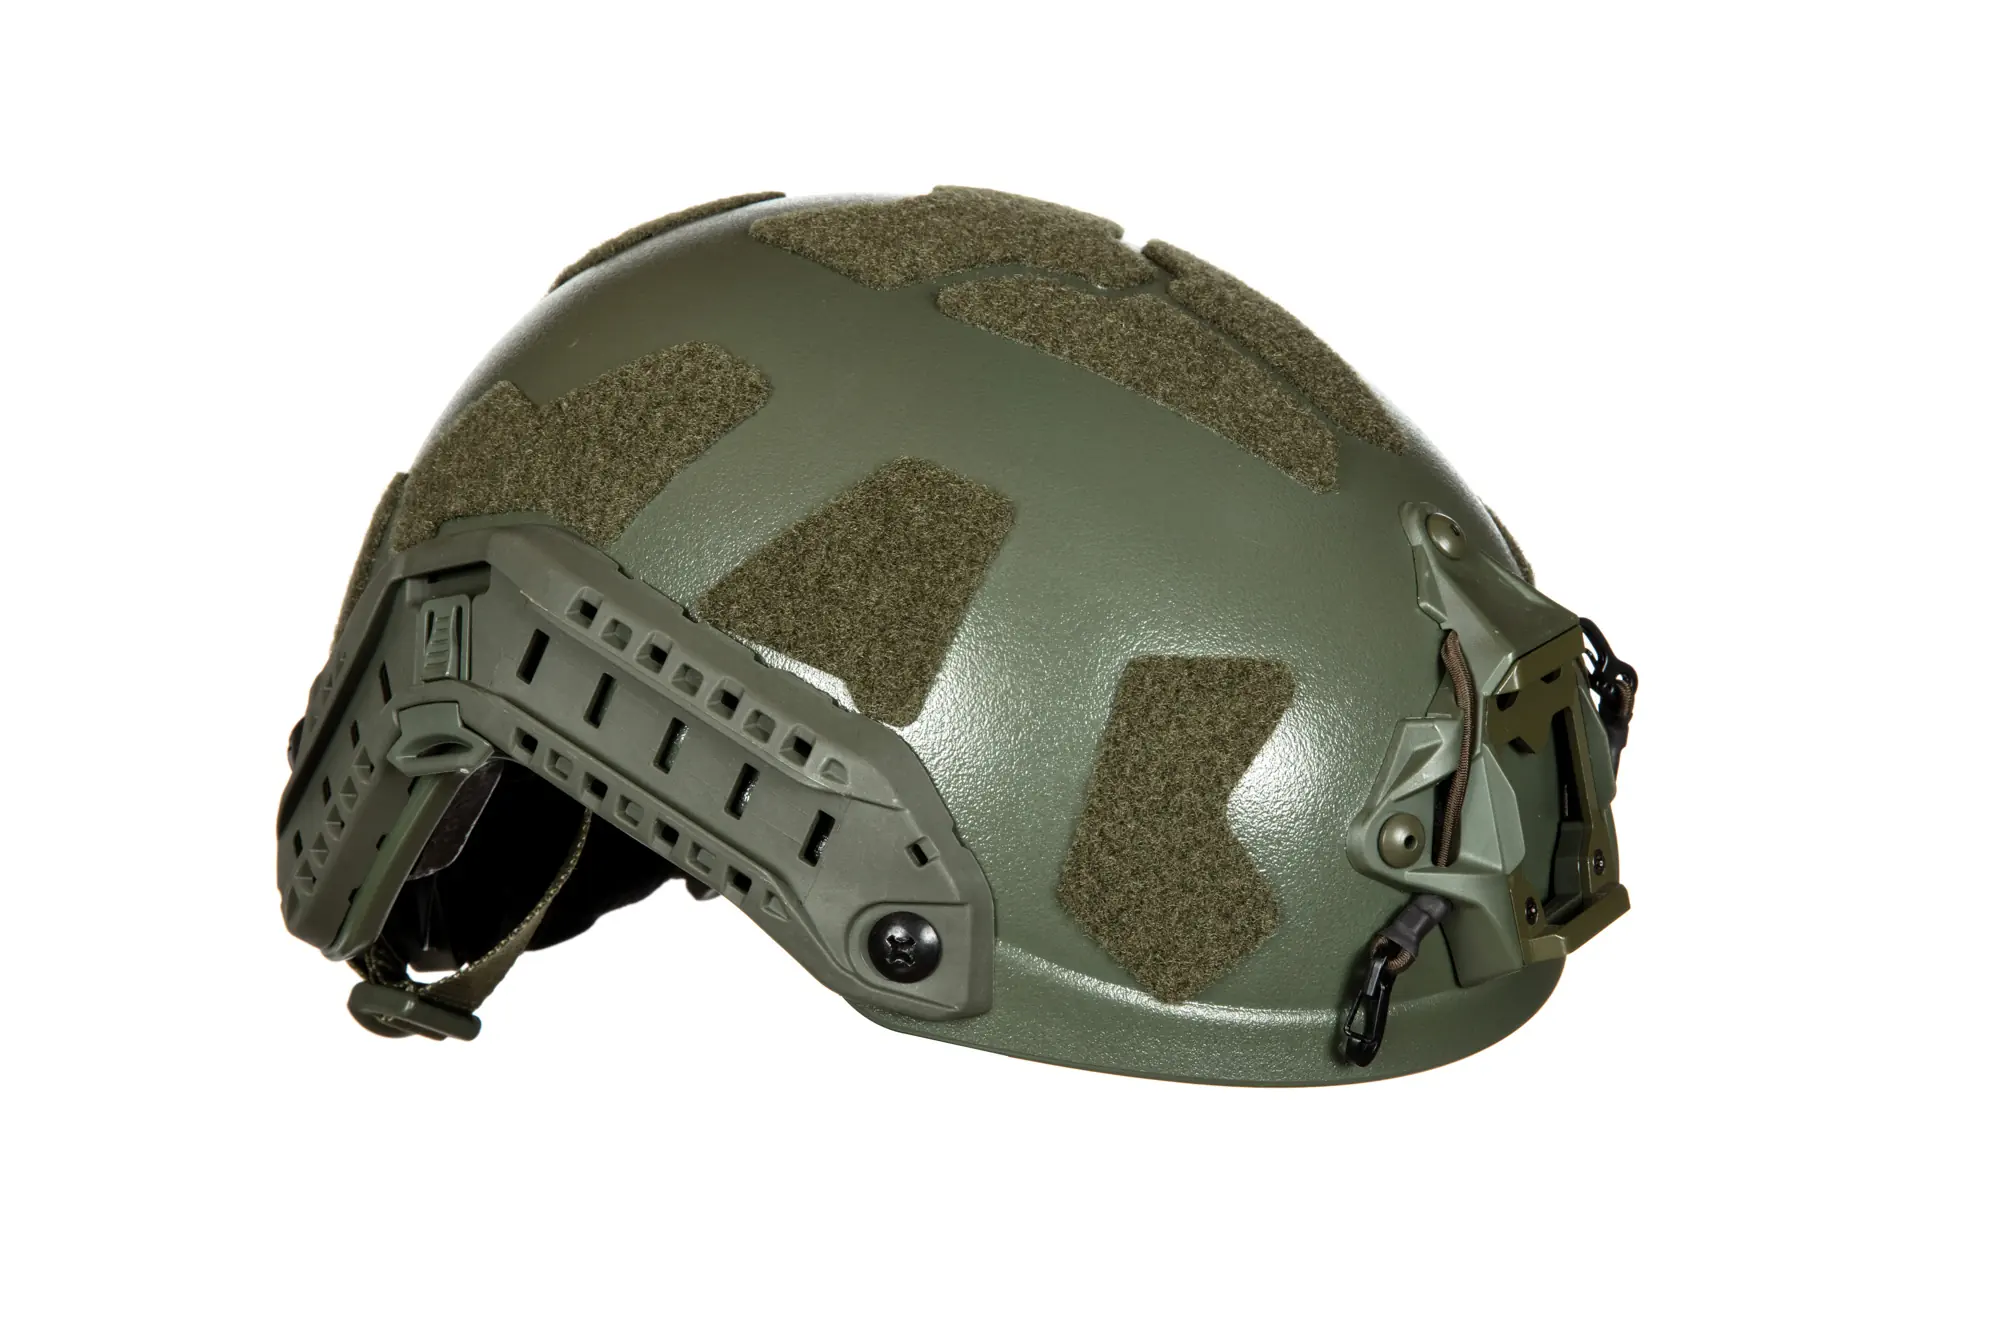 SHC X-Shield Helmet replica - Olive